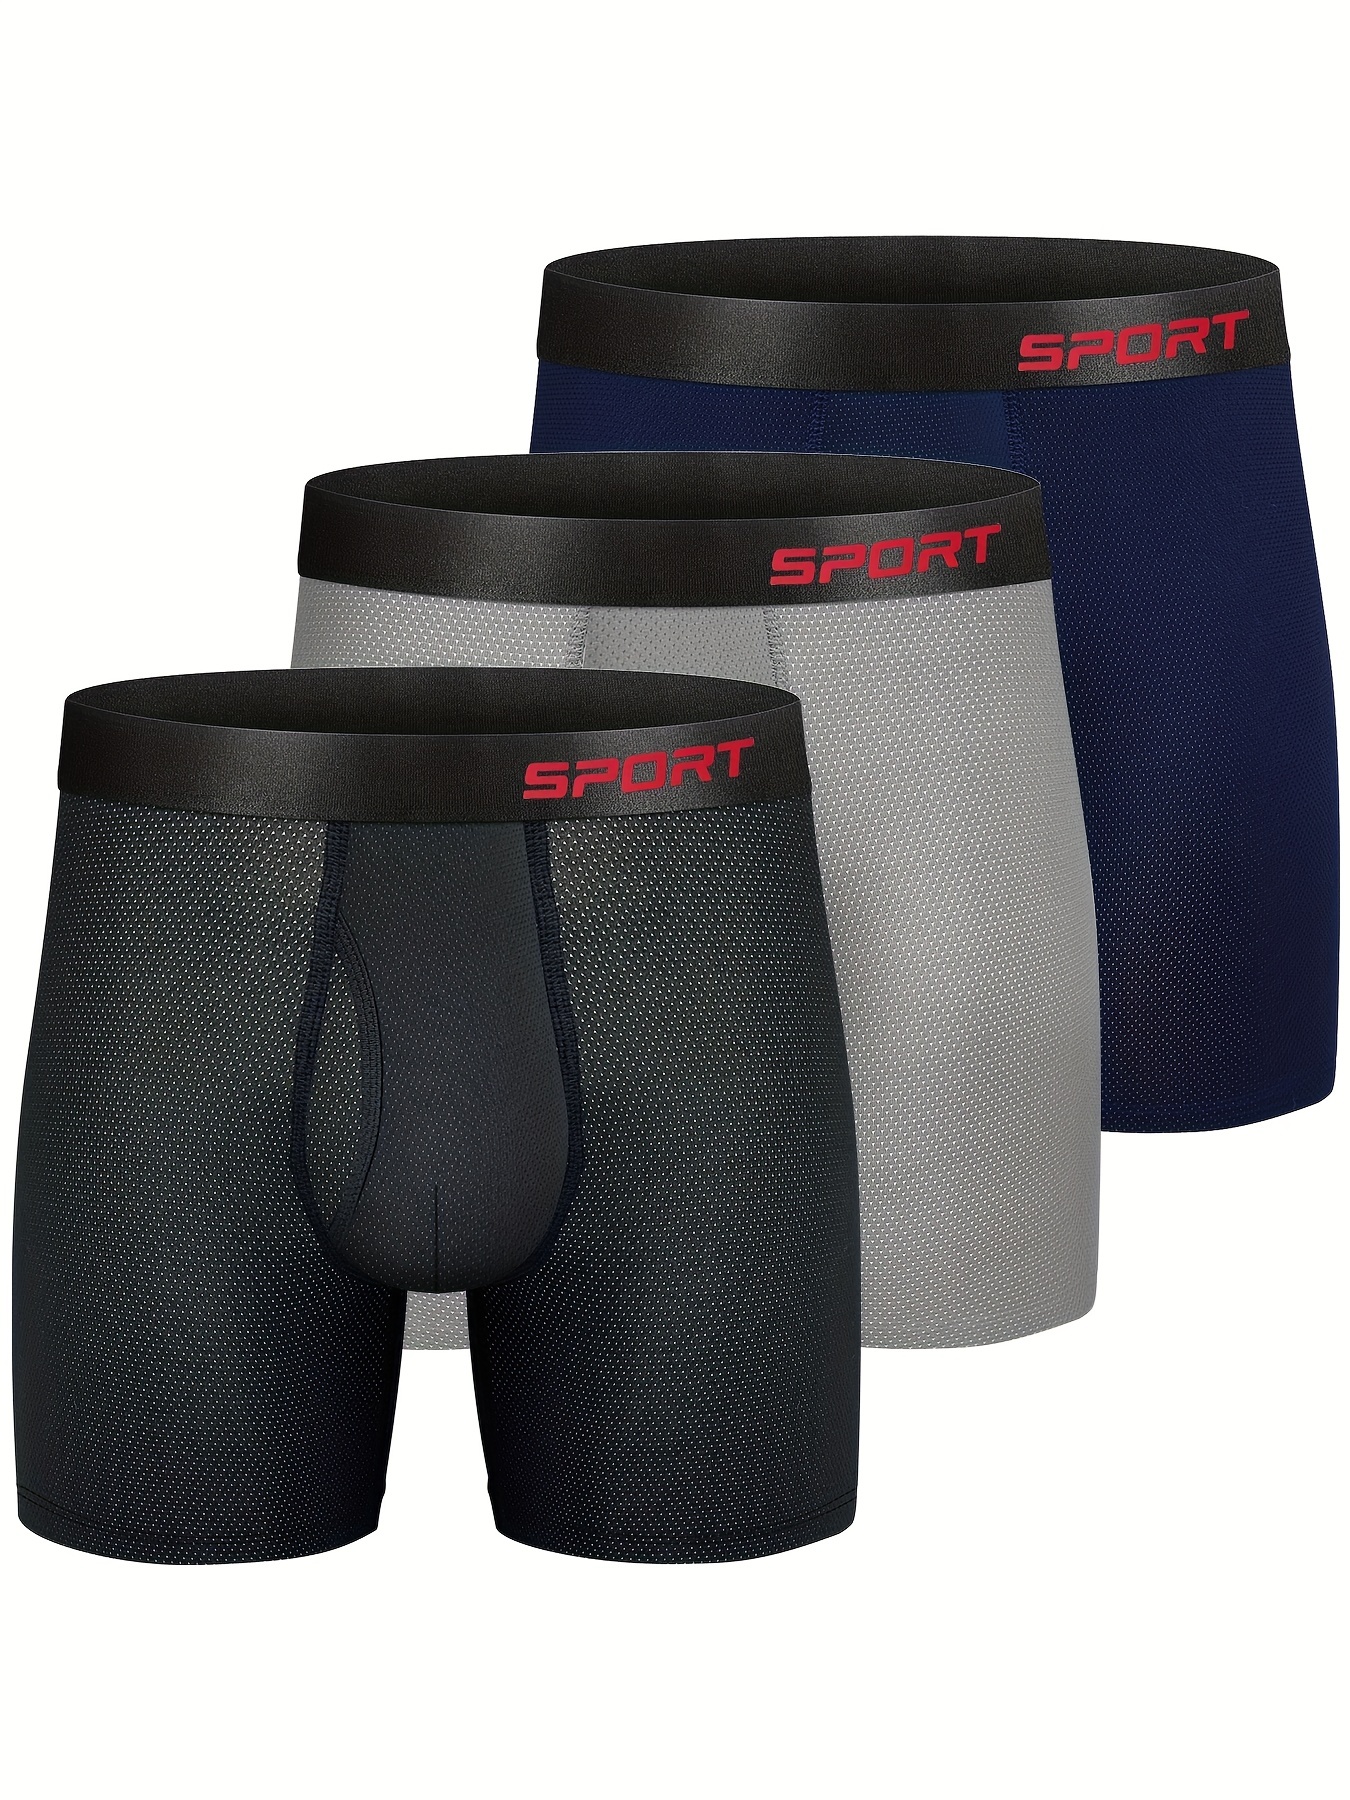 Separatec Men's Underwear long leg Active Sport Cool Dry Performance Boxer  Brief